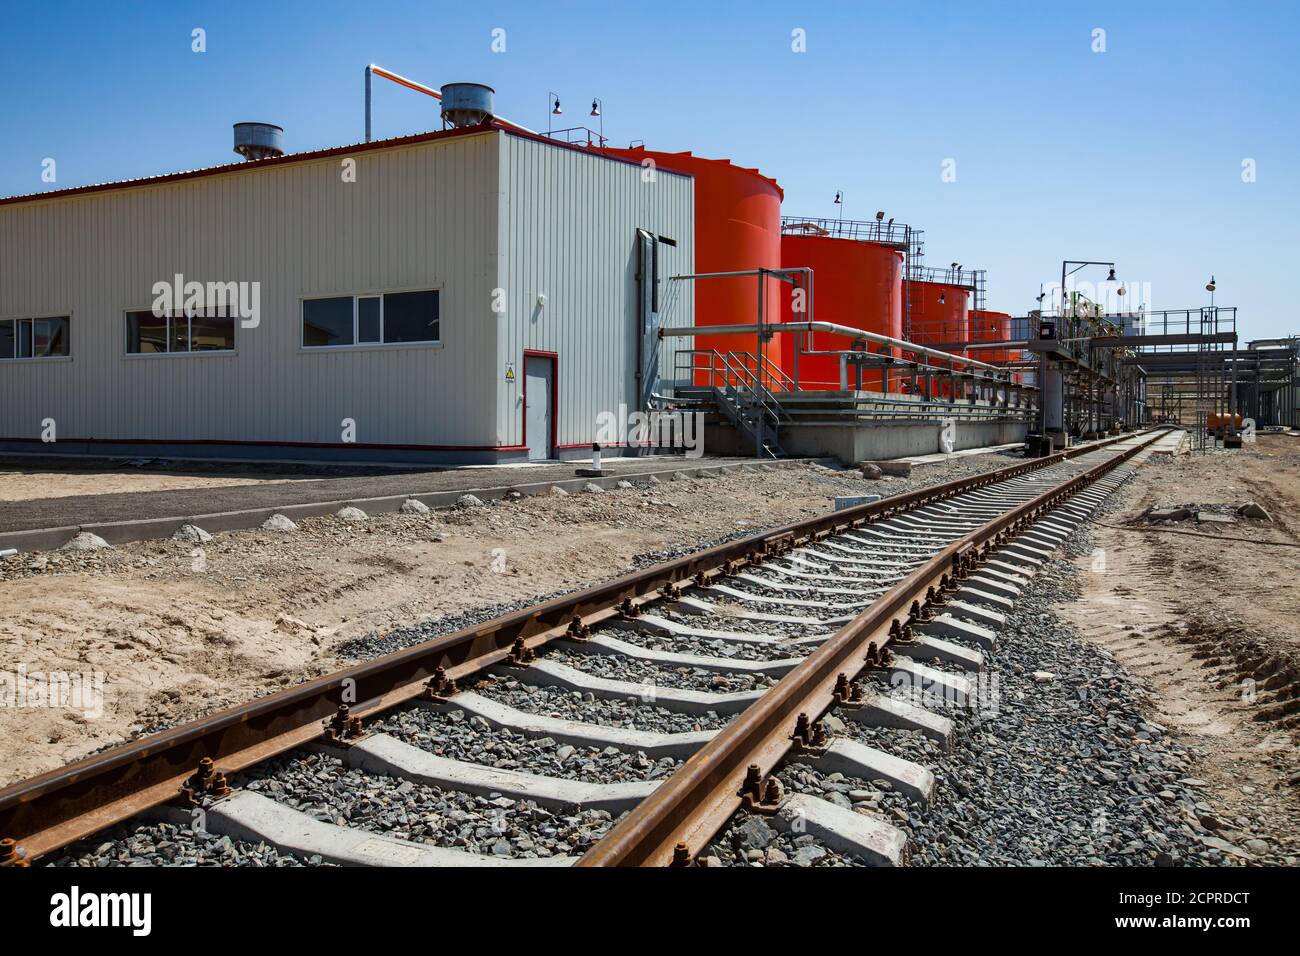 Orange steel storage tanks with acid at (sulphuric) acid plant warehouse. Cargo train filling (loading) terminal. Stock Photo